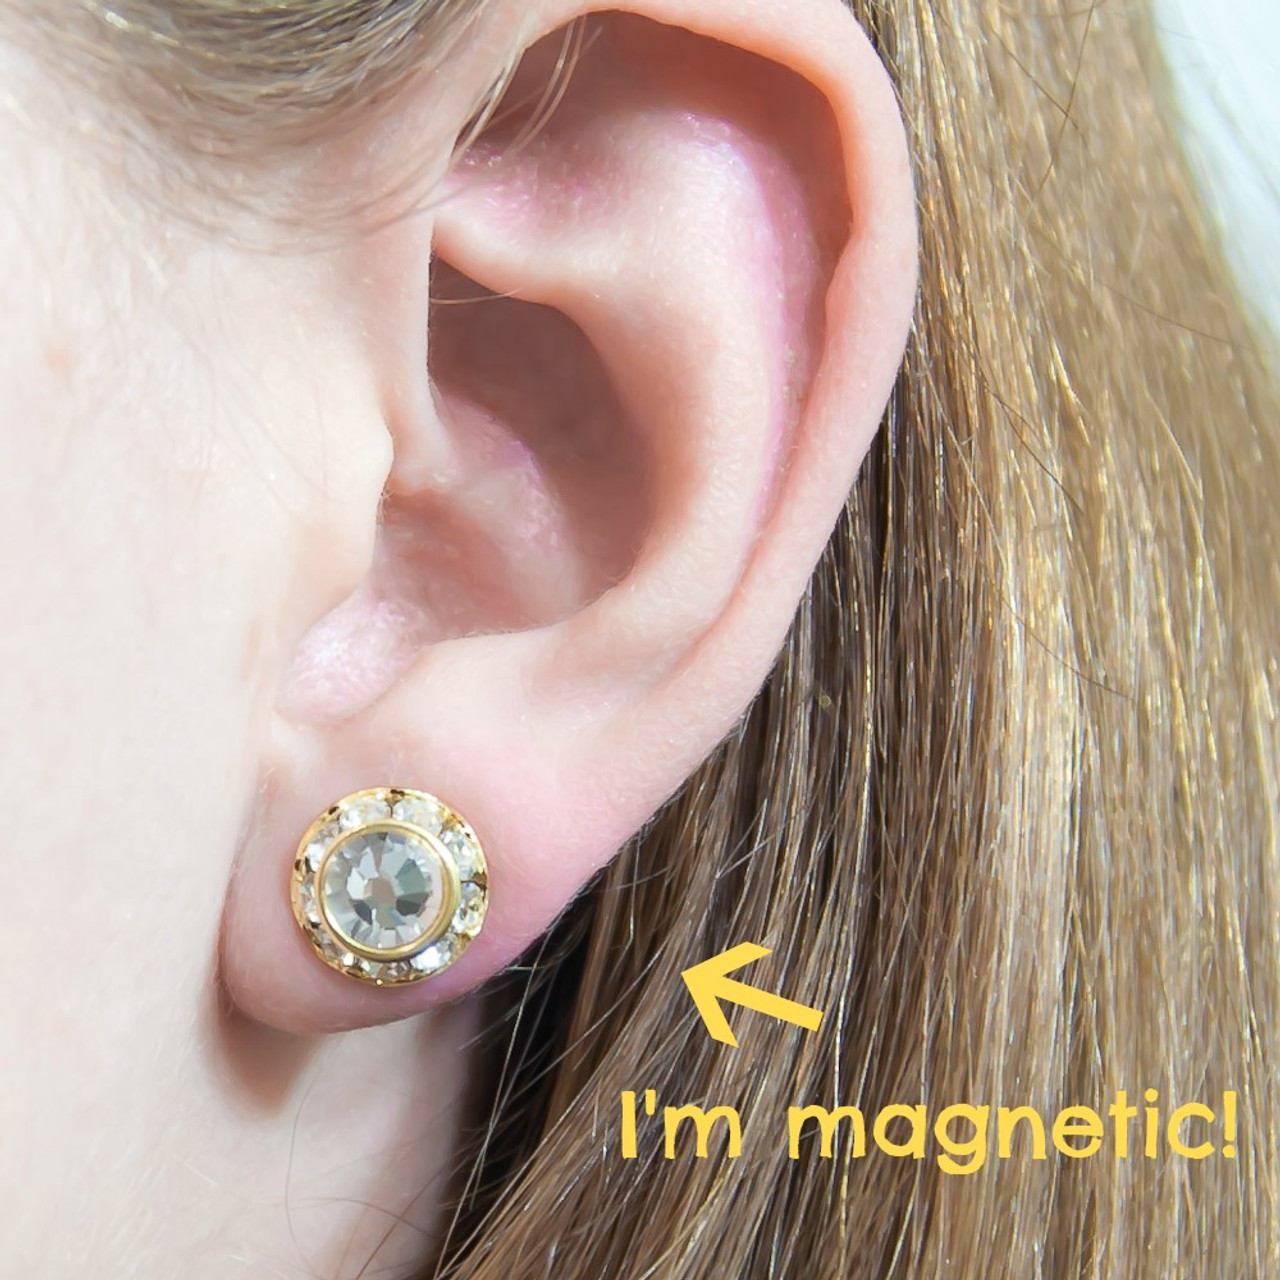 US 1-2 Pcs Stainless Steel Magnetic Stud Earrings Men Women Non-piercing  Clip on - Walmart.com